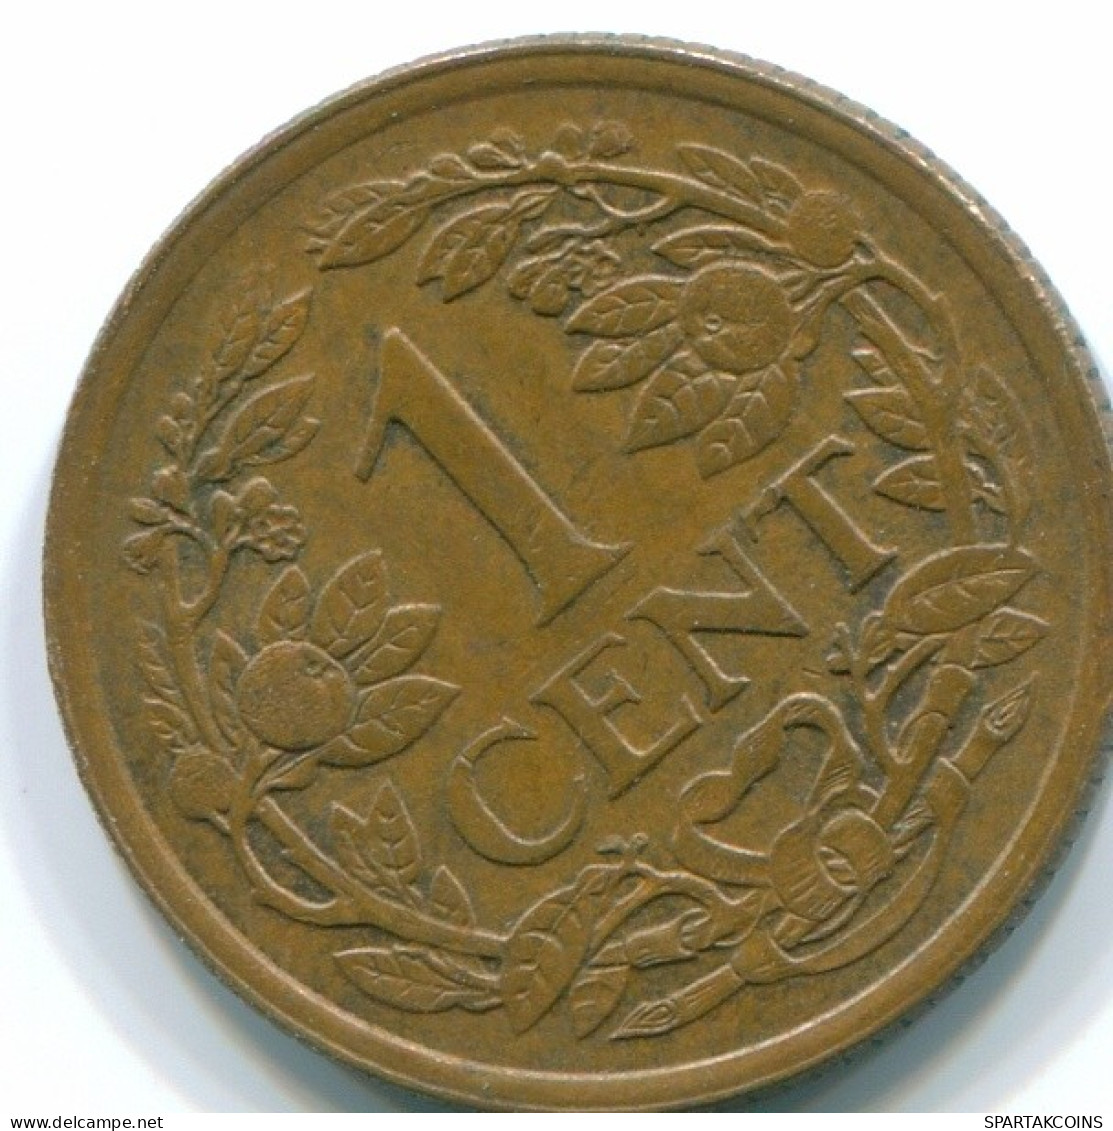 1 CENT 1968 NETHERLANDS ANTILLES Bronze Fish Colonial Coin #S10775.U.A - Netherlands Antilles